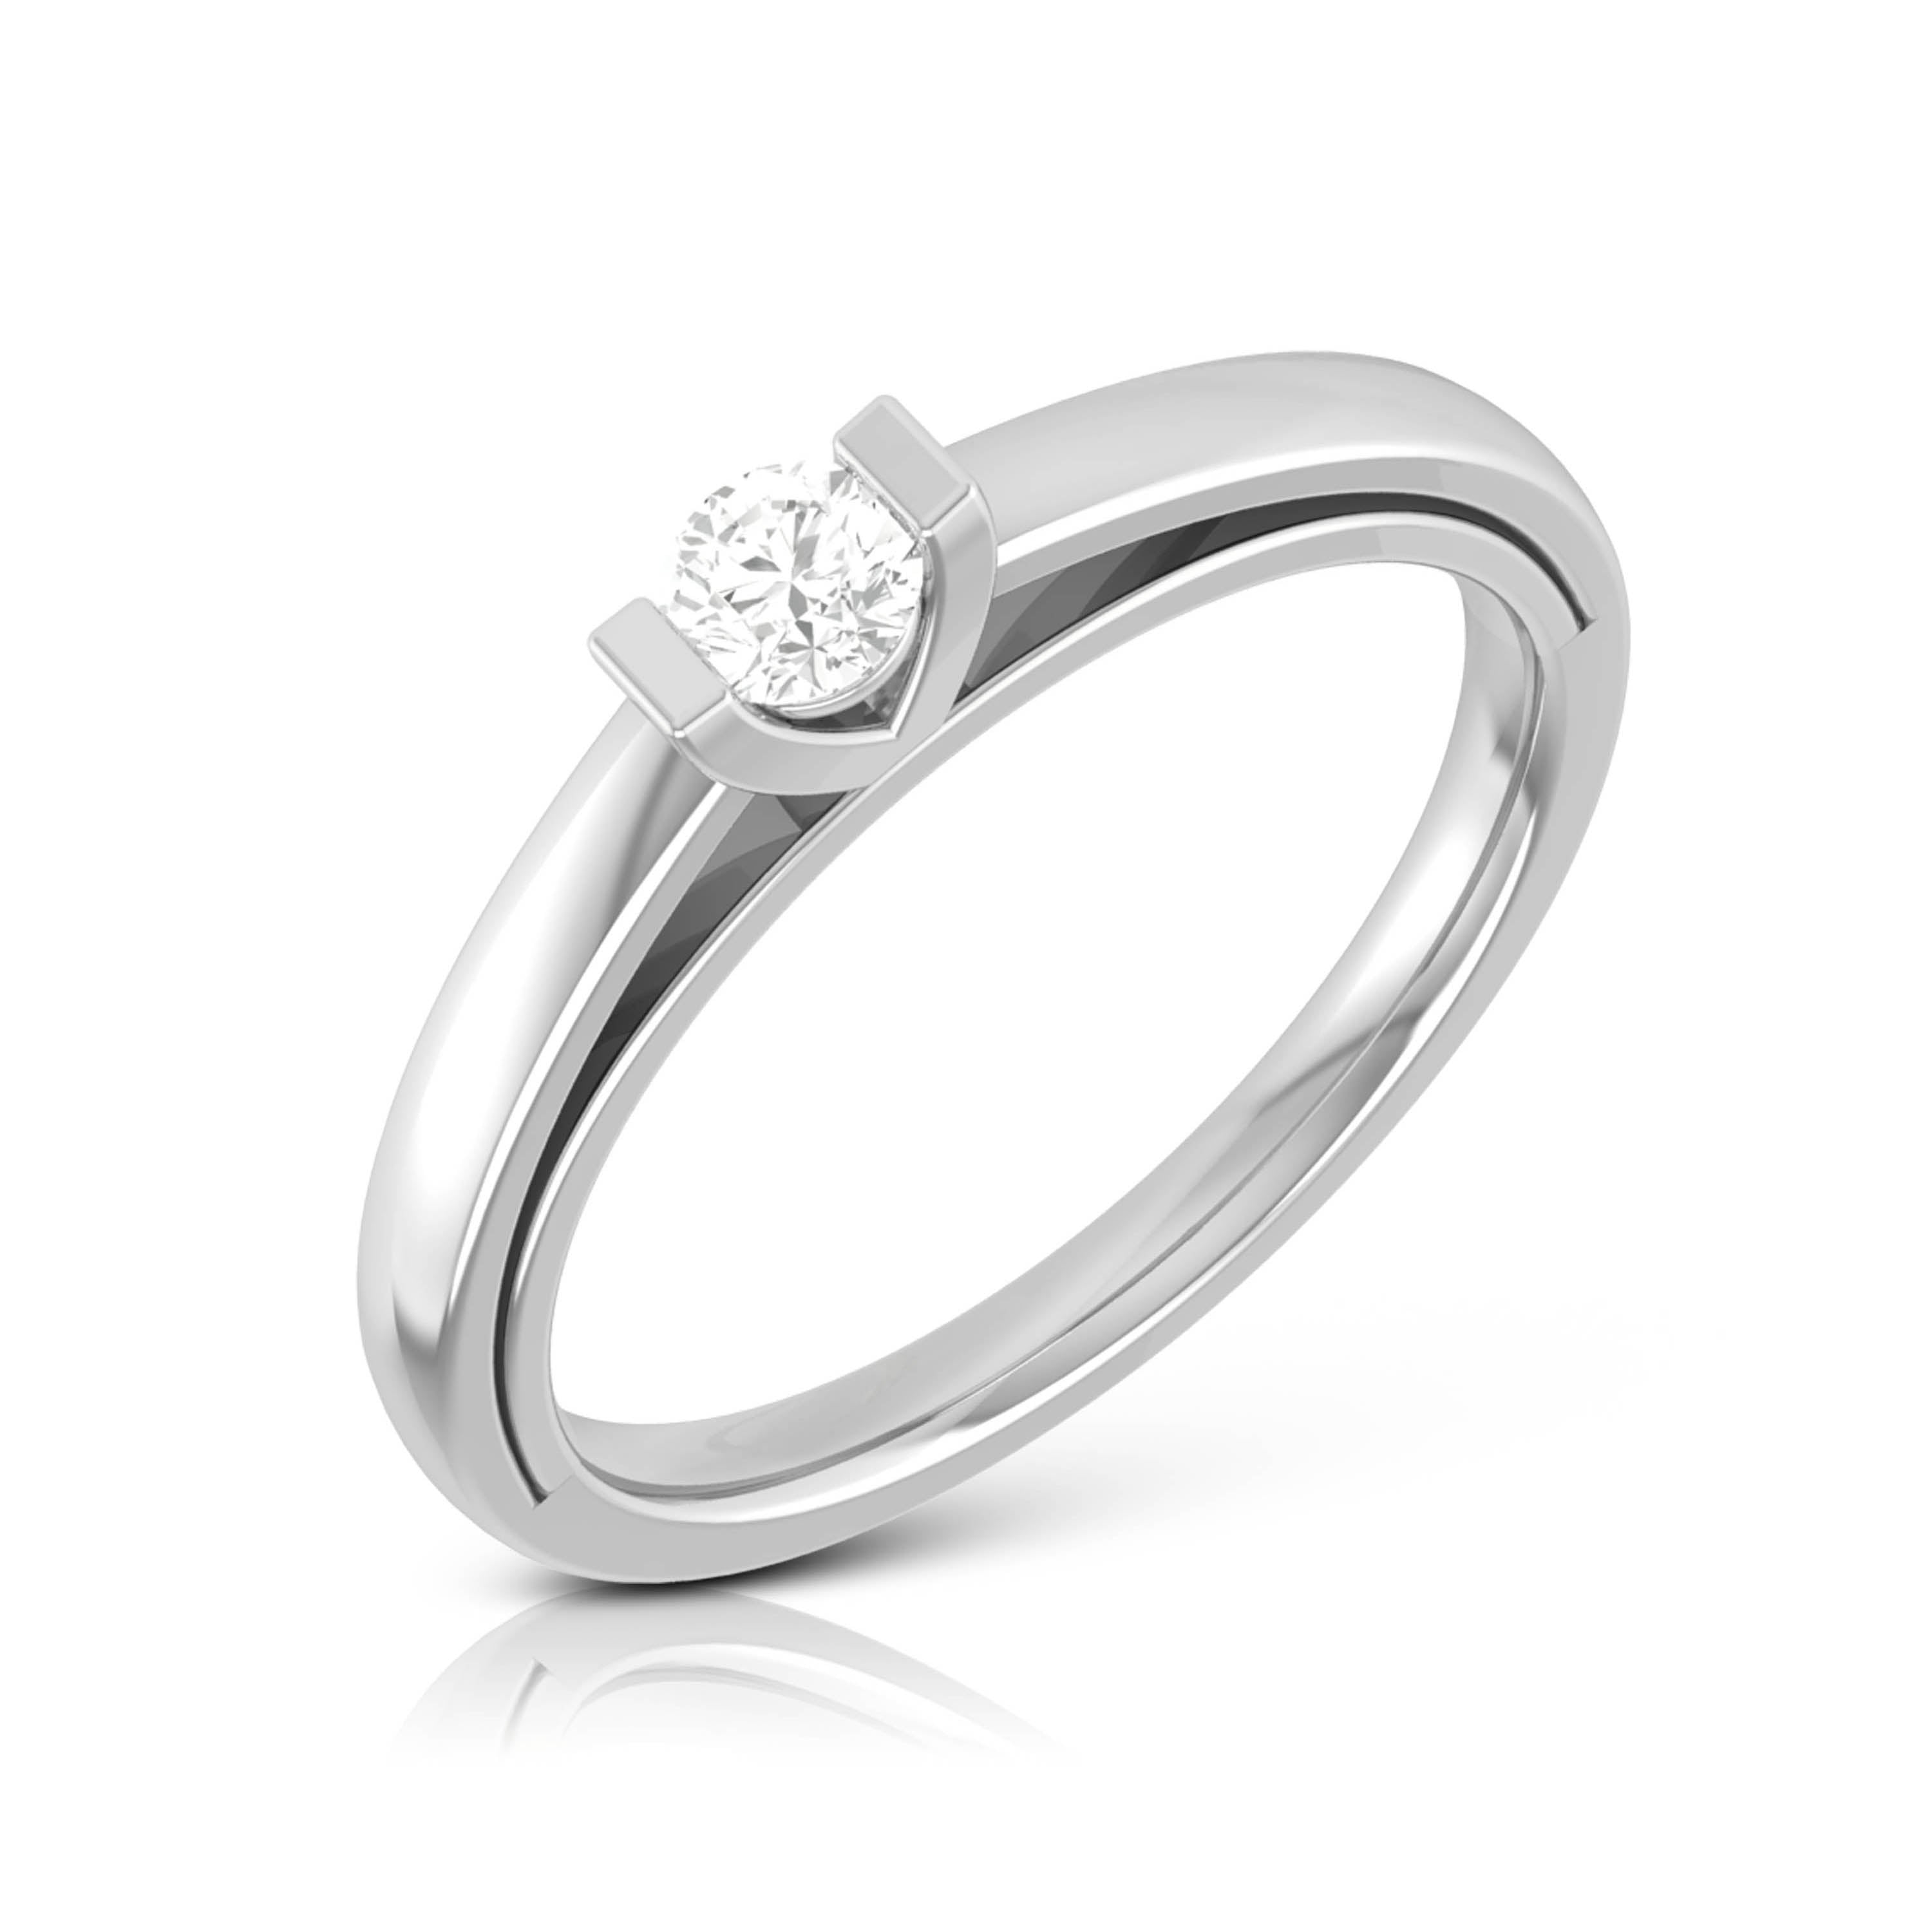 Buy Platinum Rings Online | Platinum rings for Men&Women | Tanishq